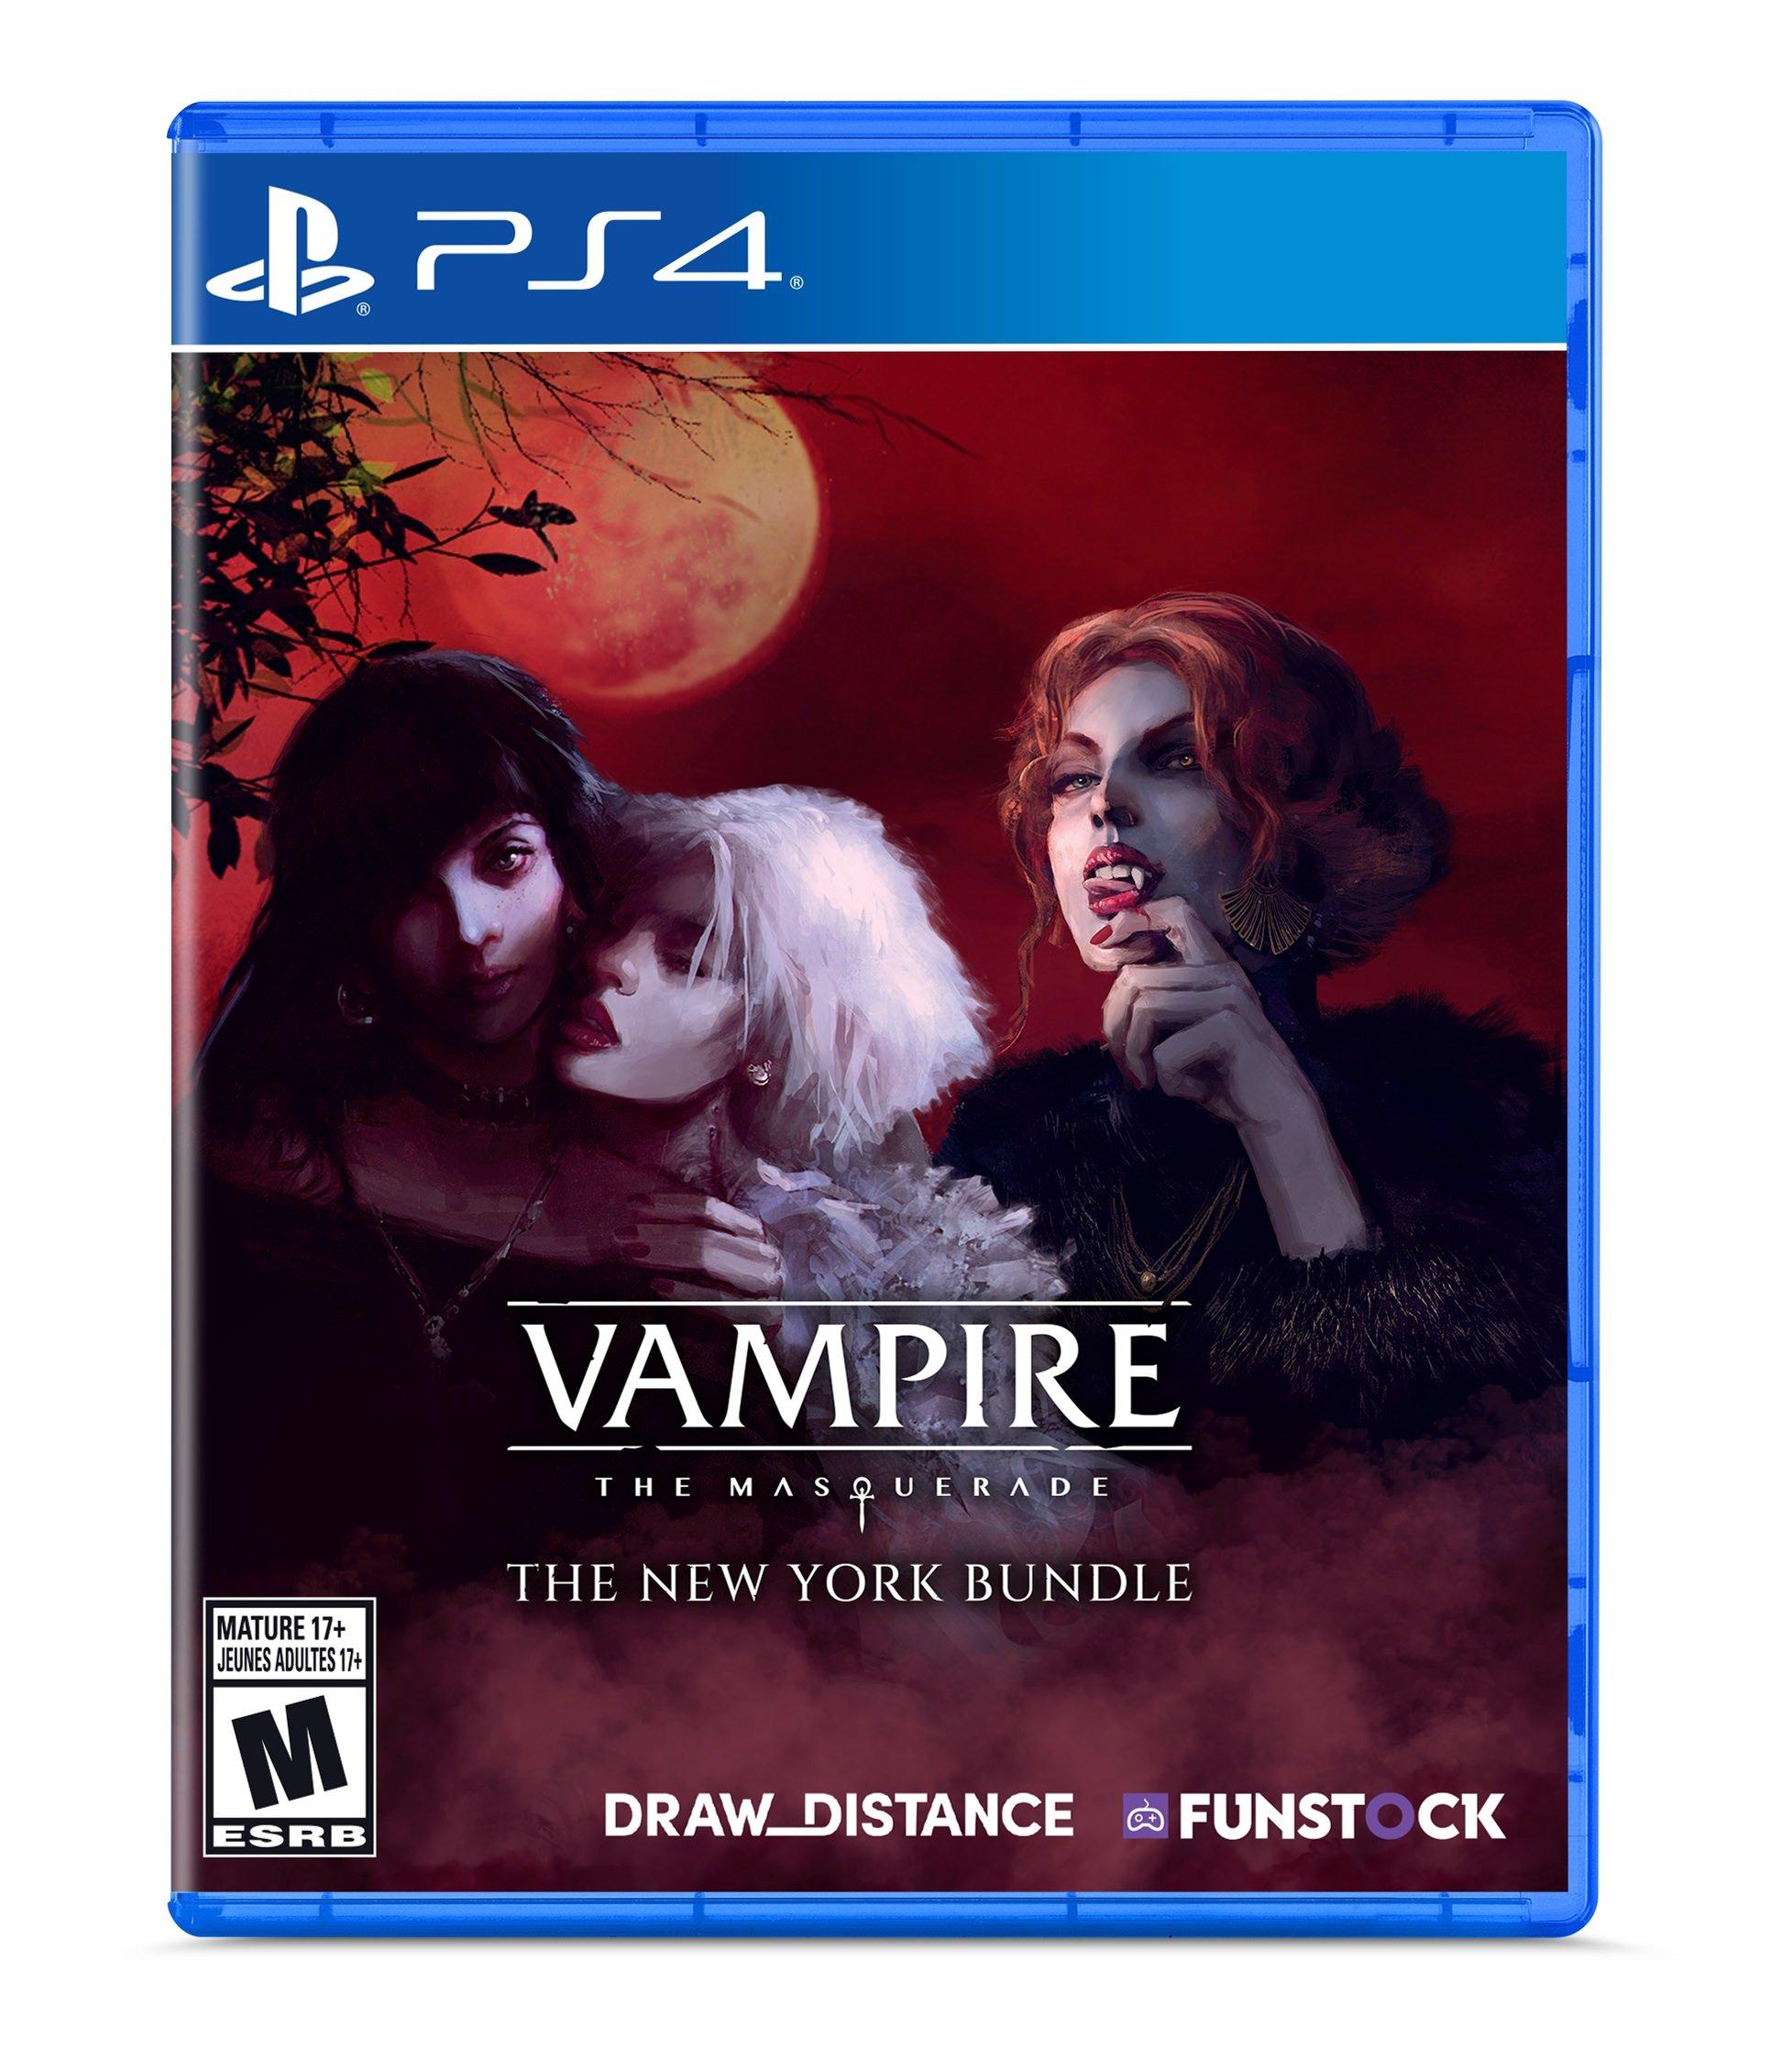 Vampire The Masquerade Coteries of New York (XBOX ONE) cheap - Price of $